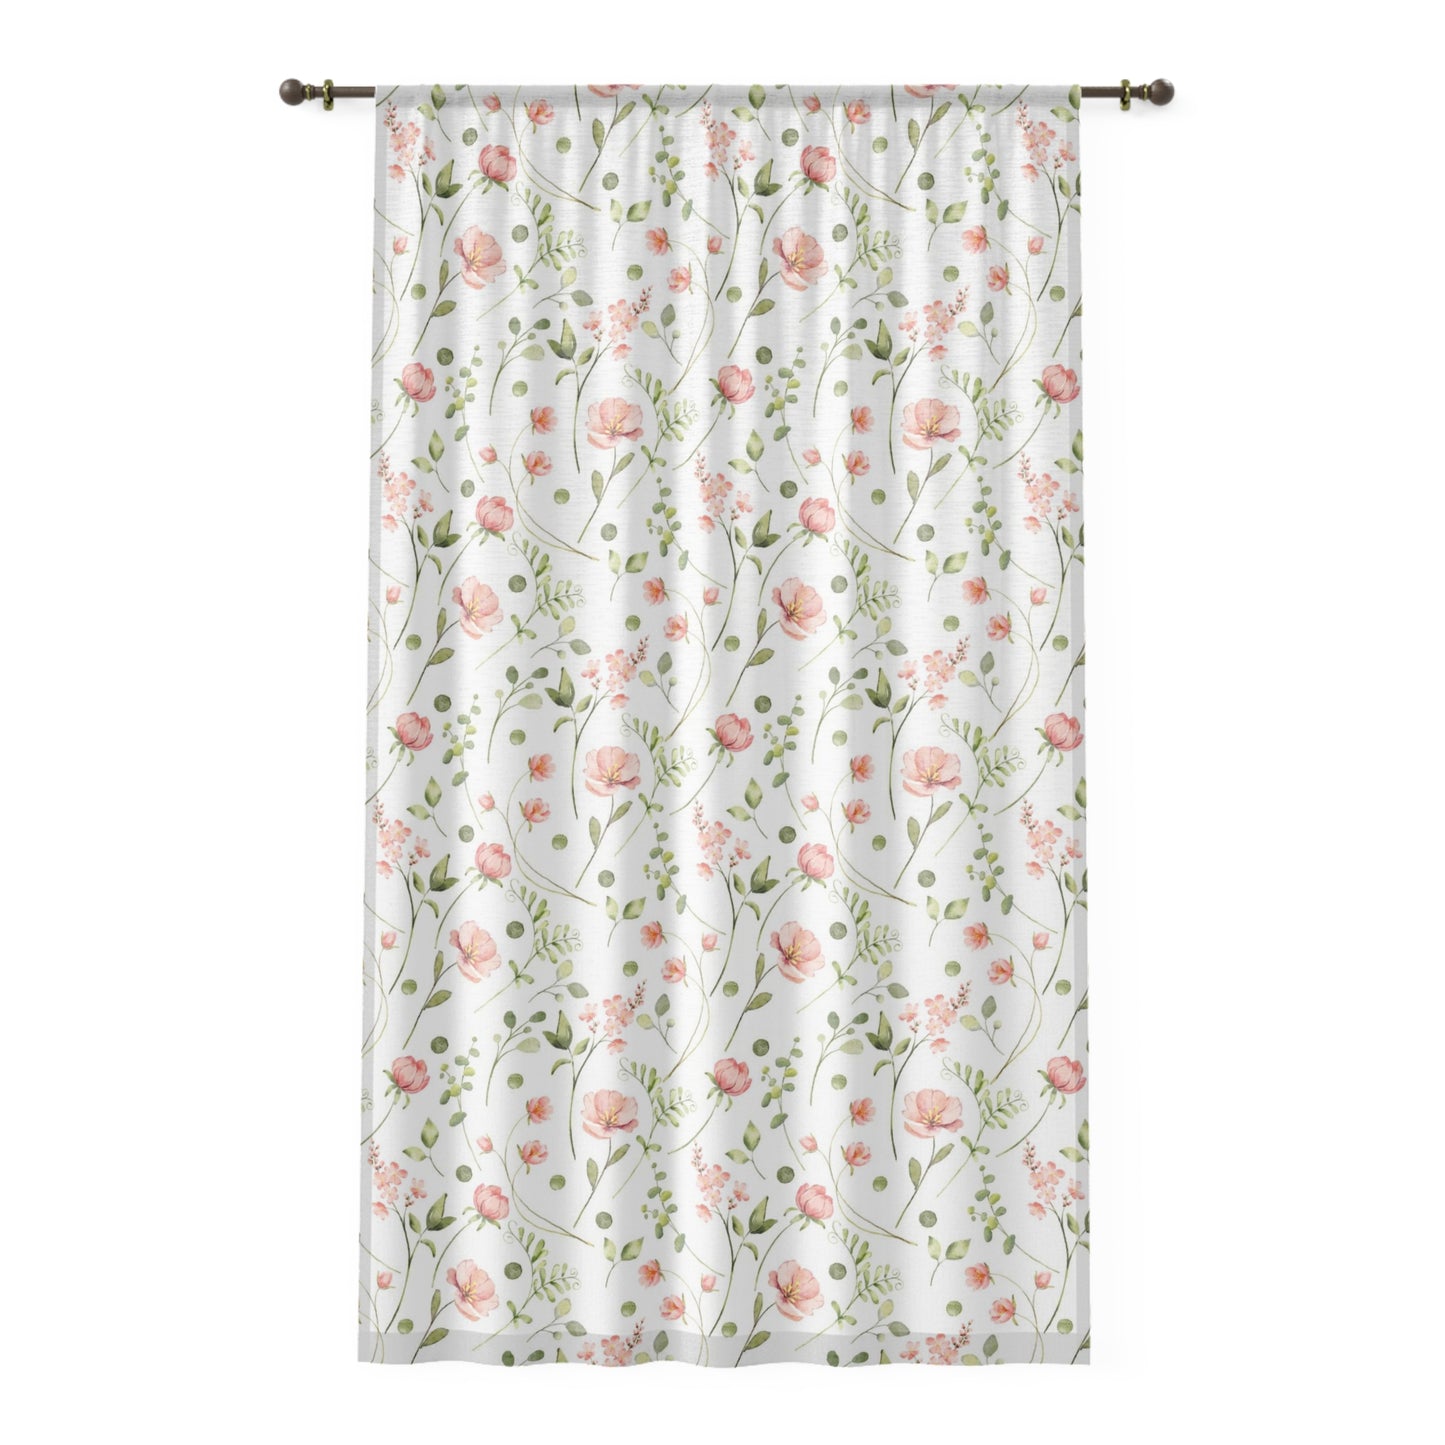 Wildflowers sheer Curtain, Poppy sheer curtain single panel, Nursery floral